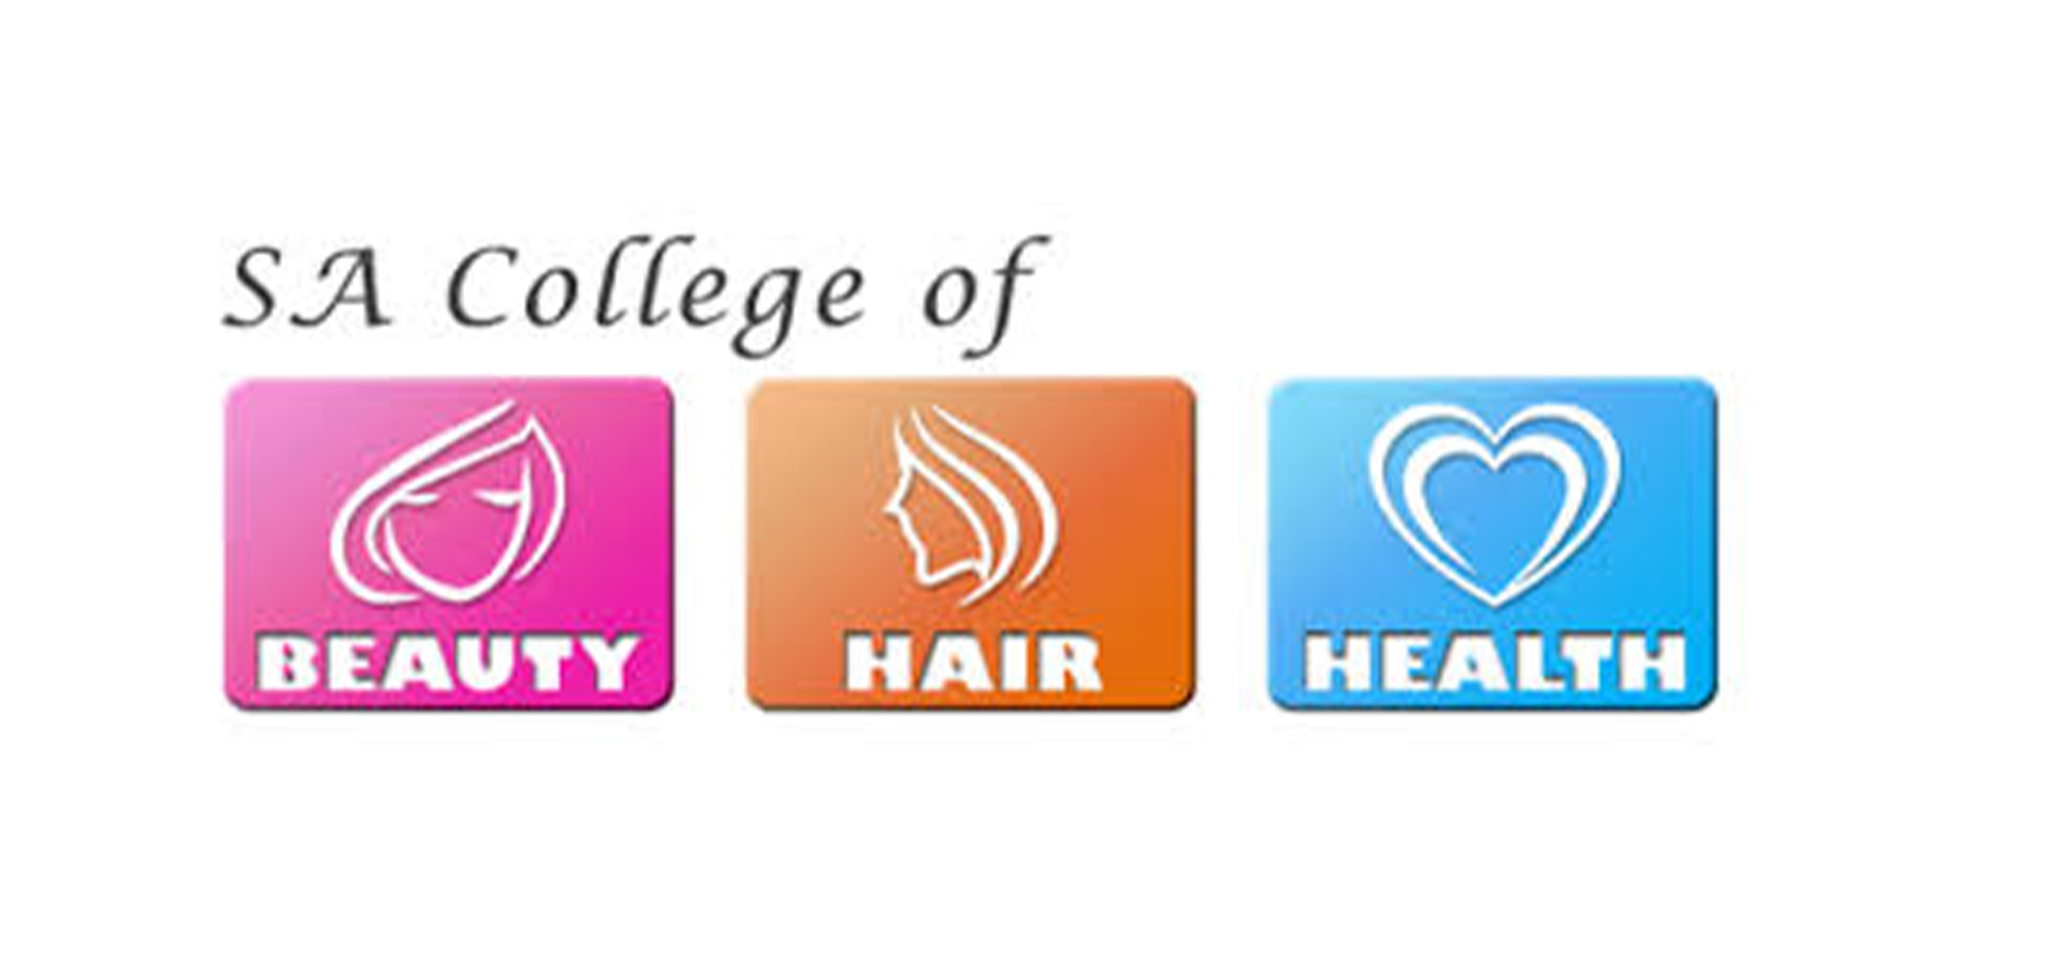 Sa College of Beauty, Hair and Health